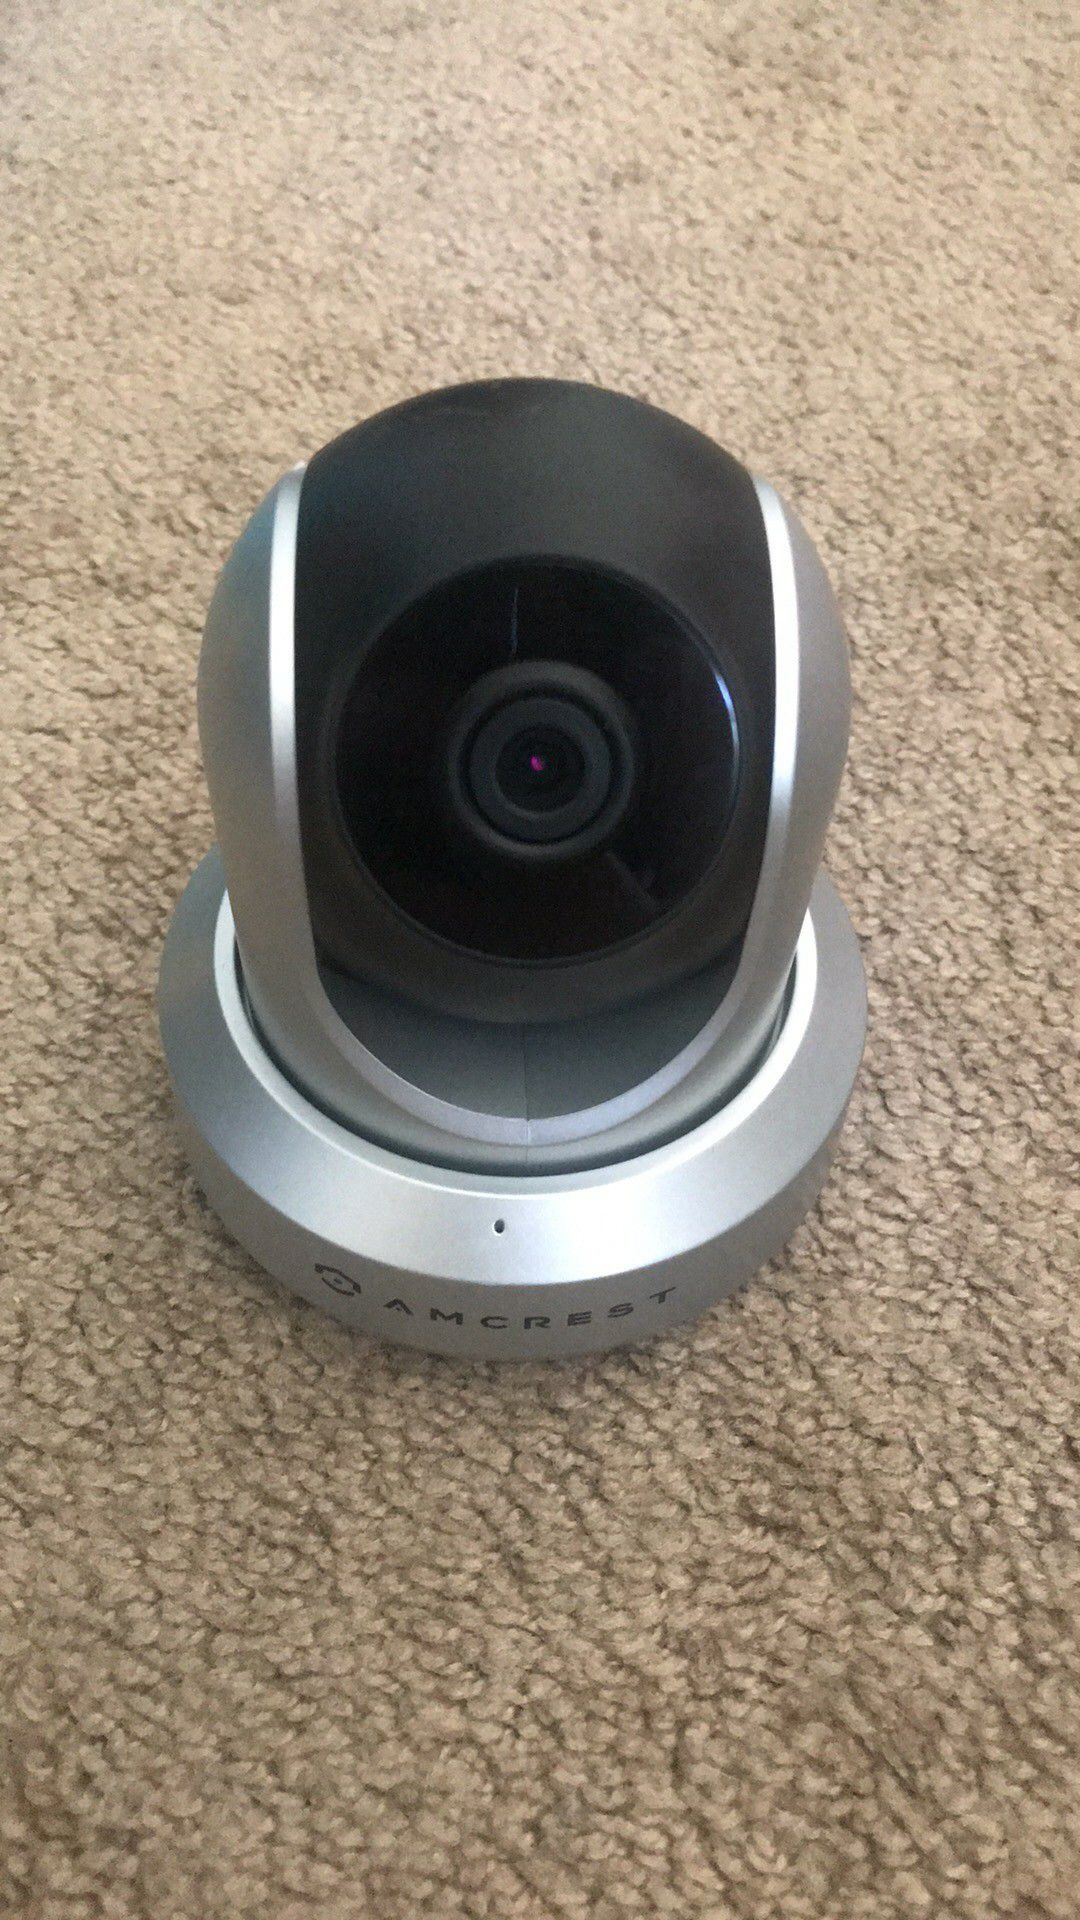 720p surveillance camera